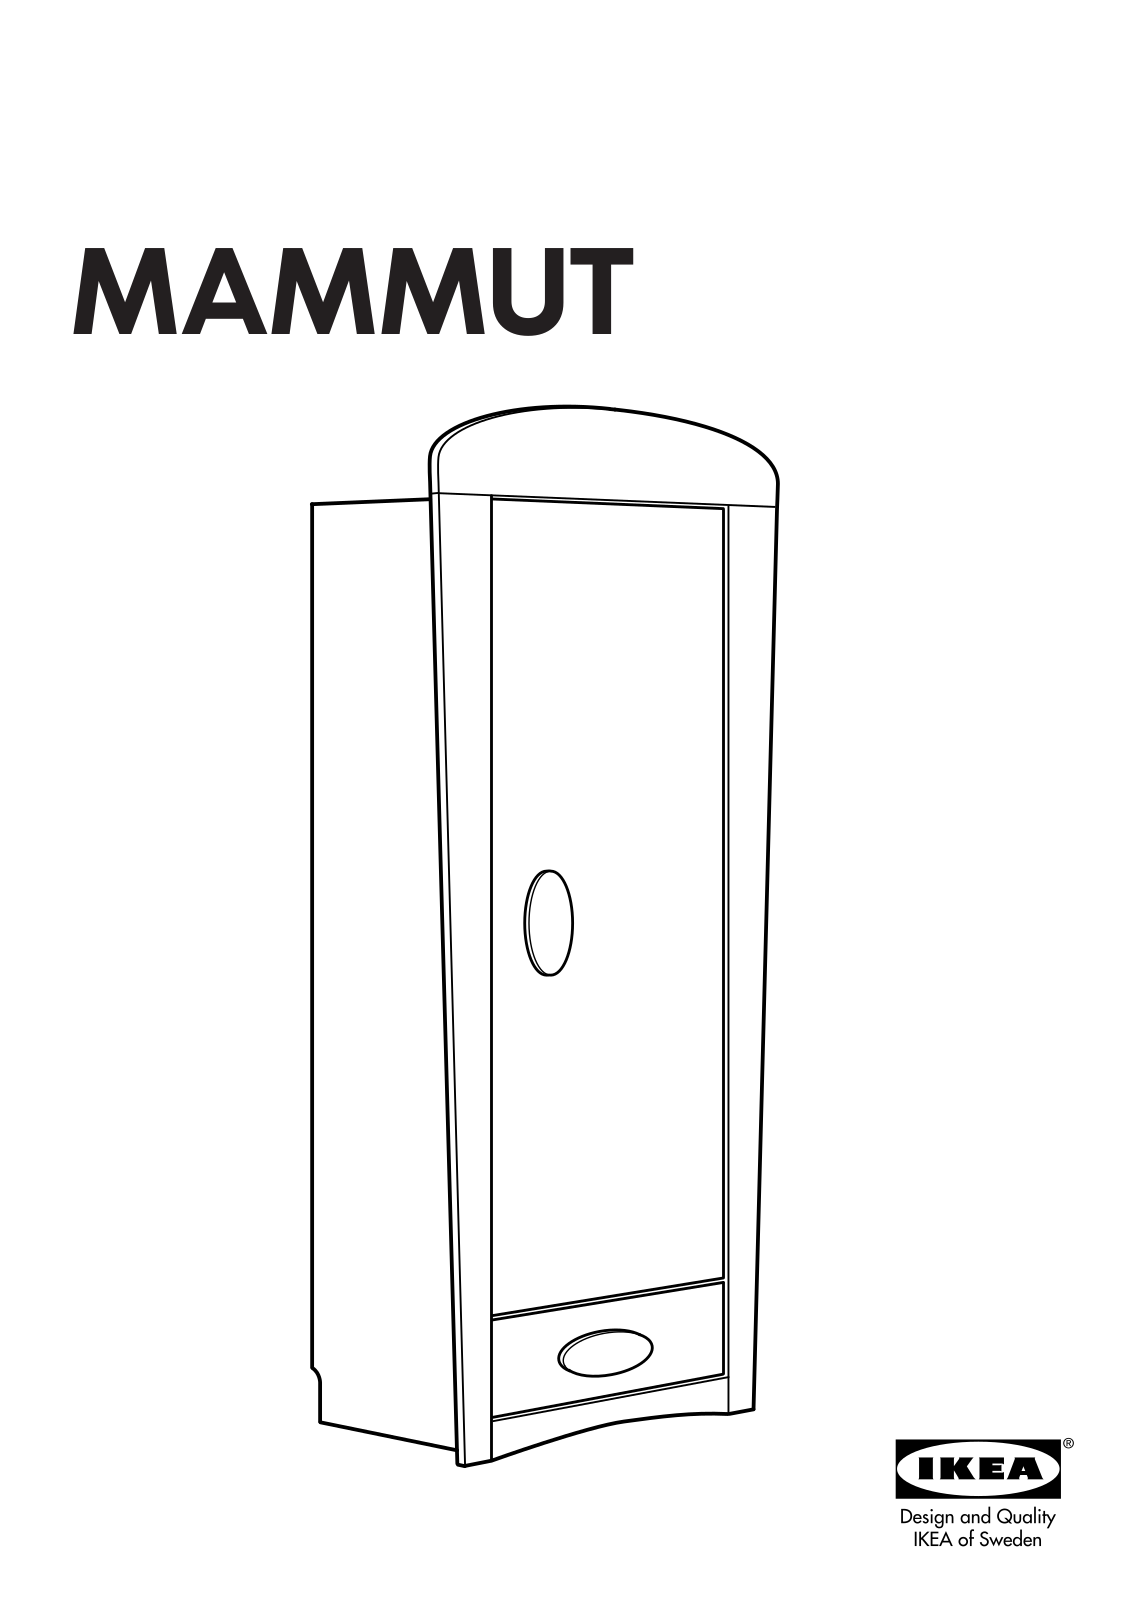 IKEA MAMMUT User Manual